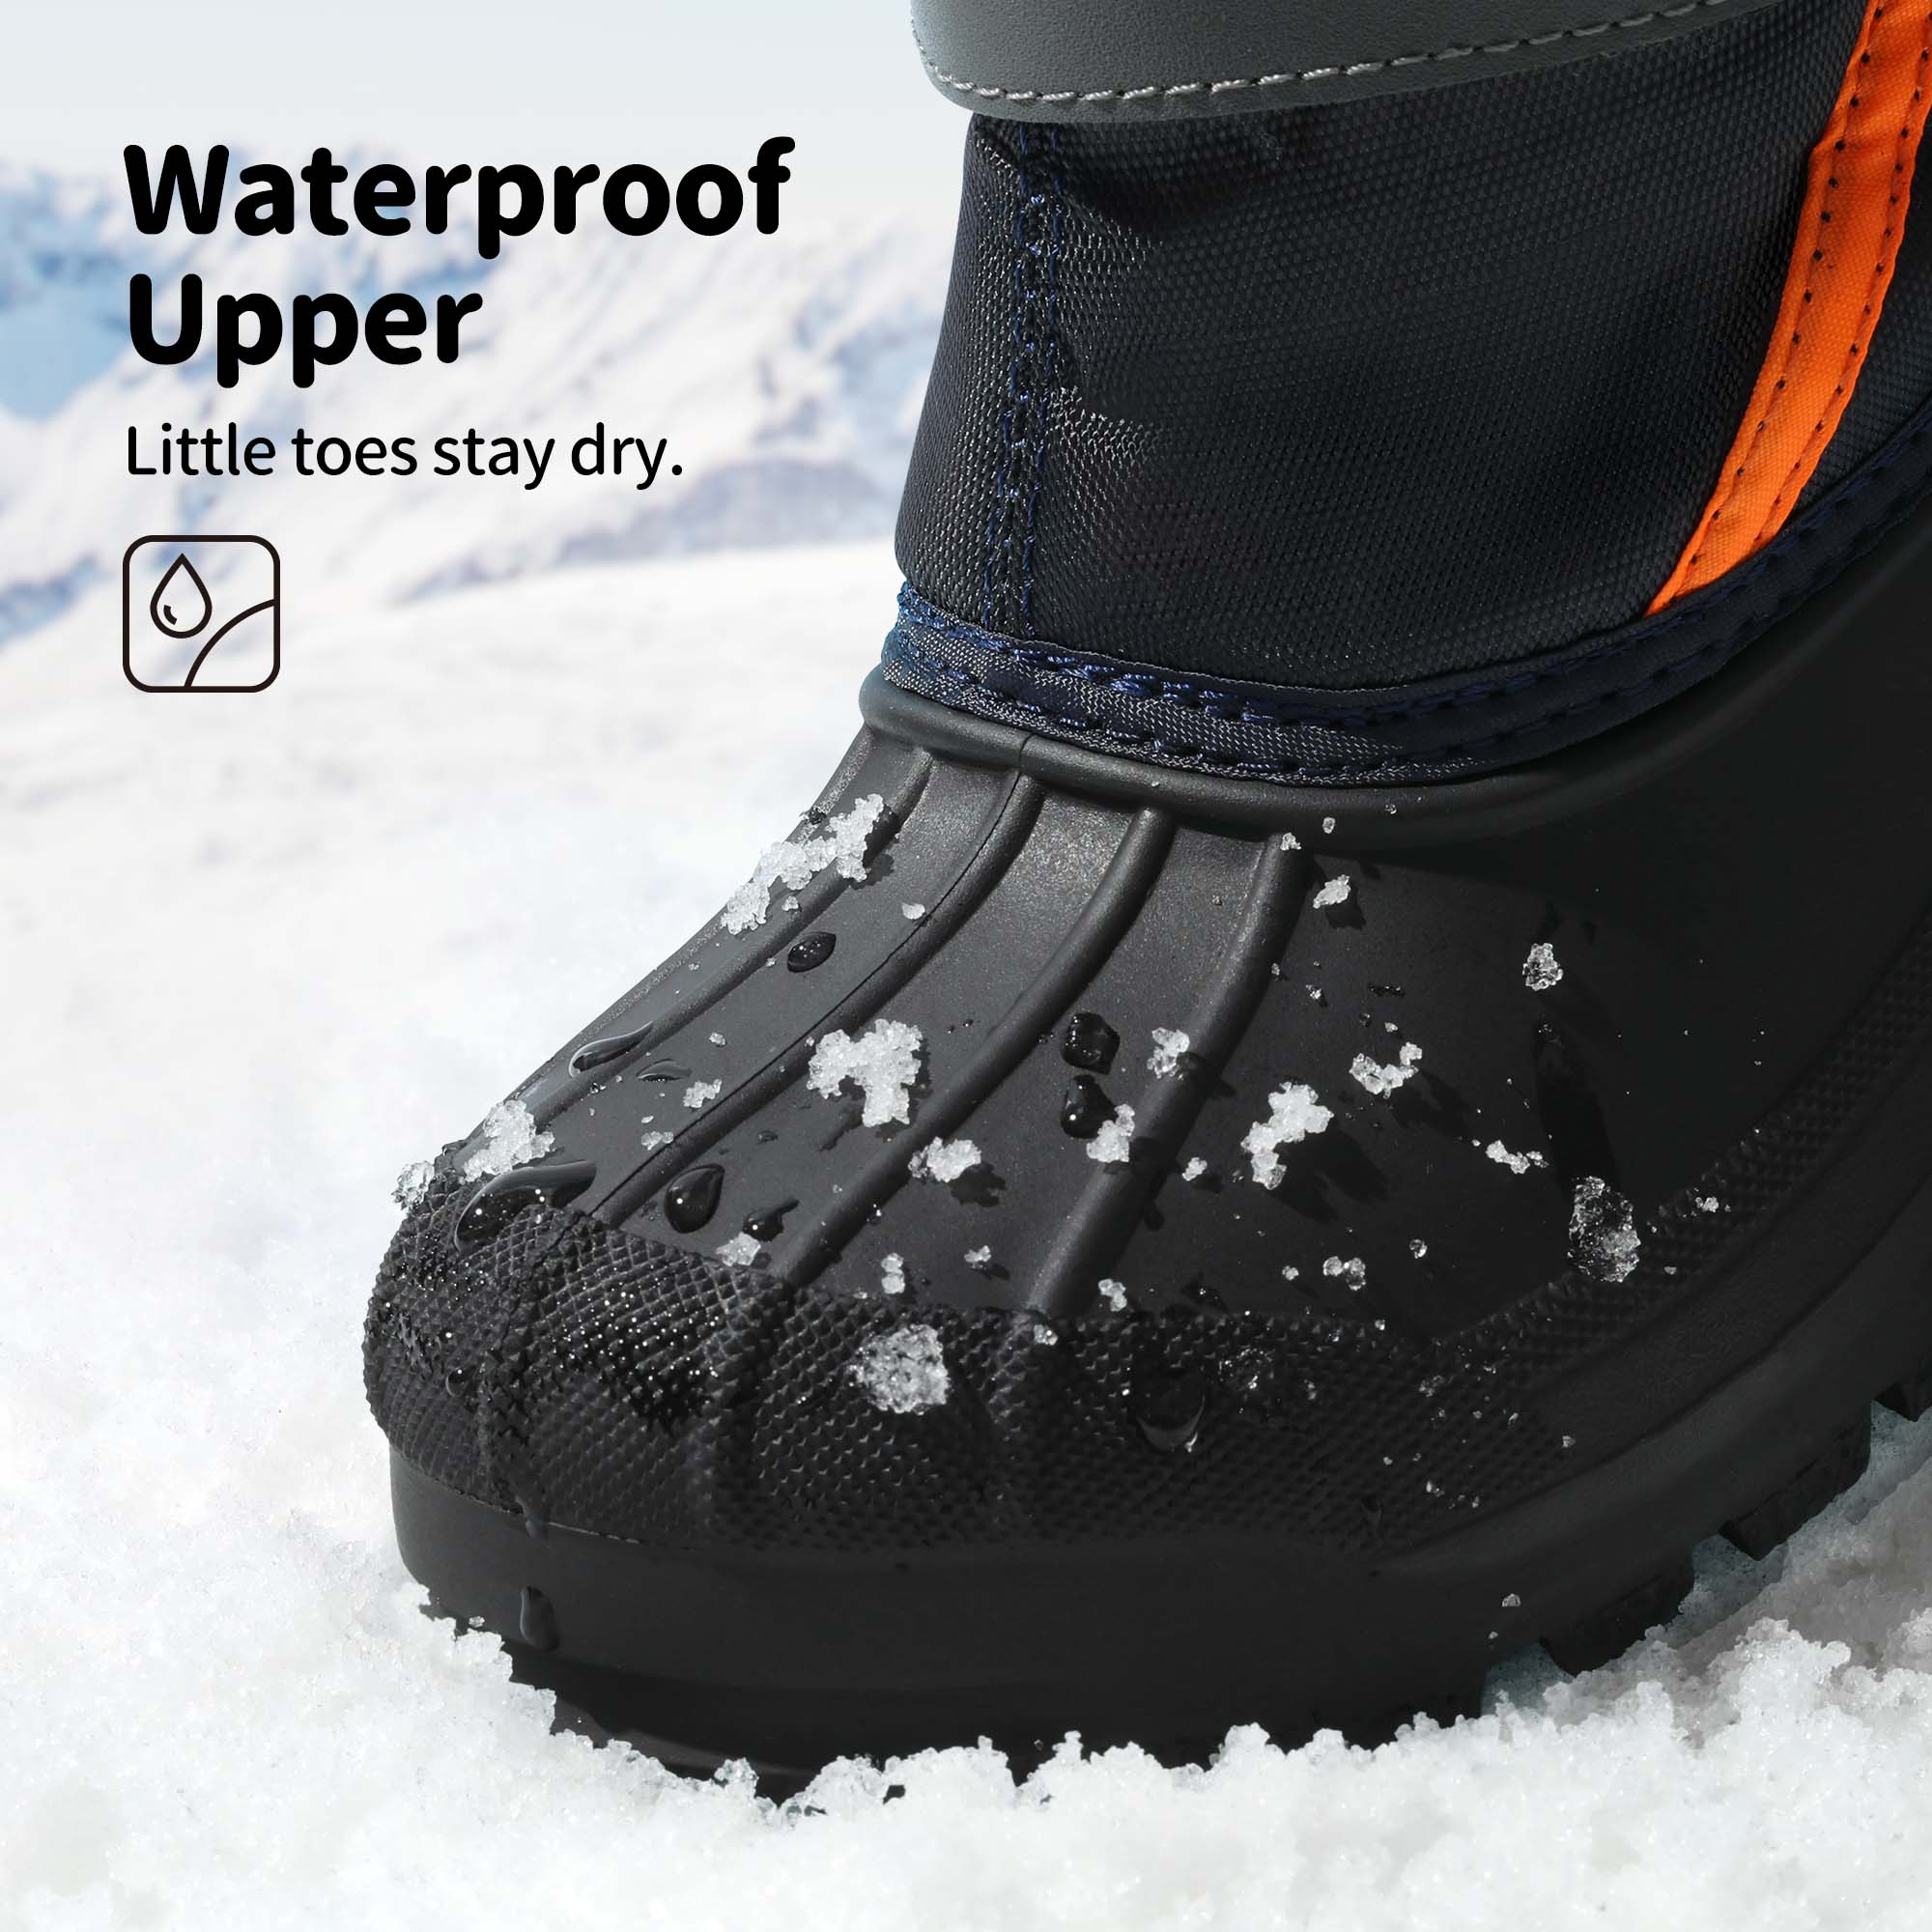 Dream Pairs Big Kid Boys & Girls Mid Calf Waterproof Winter Snow Boots KAMICK. color NAVY/GREY/ORANGE, size 2. - image 4 of 6